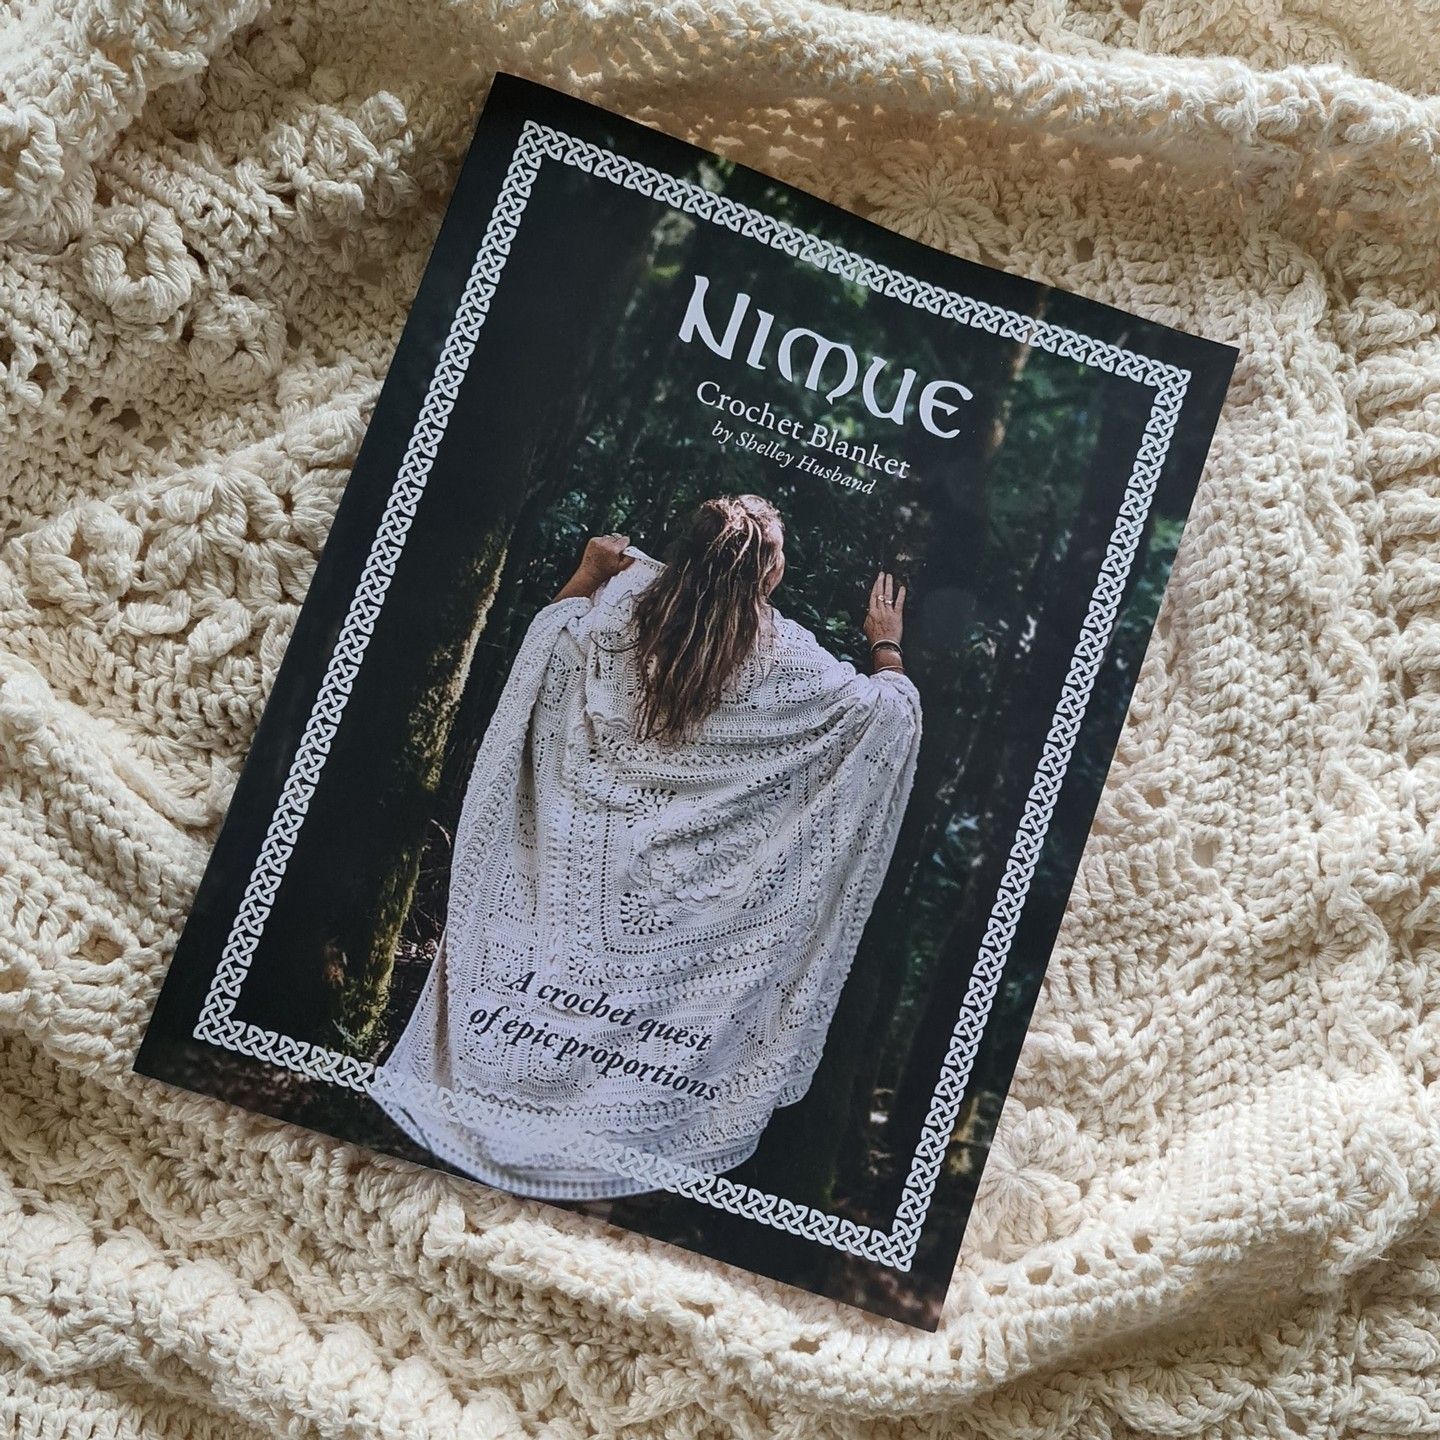 Nimue Crochet Book on Nimue blanket by Shelley Husband